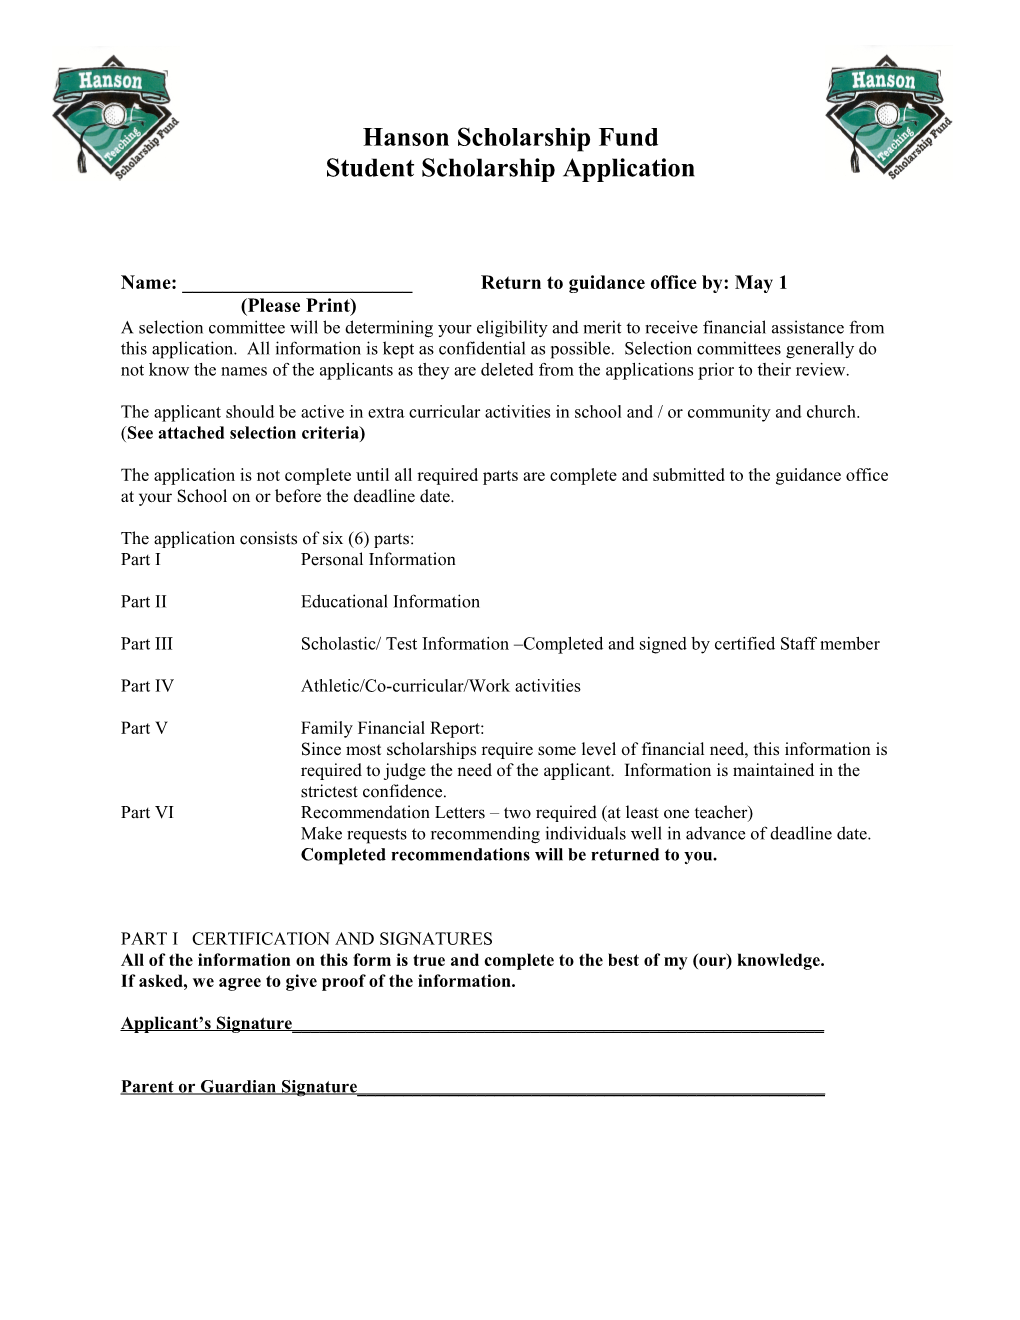 Student Scholarship Application